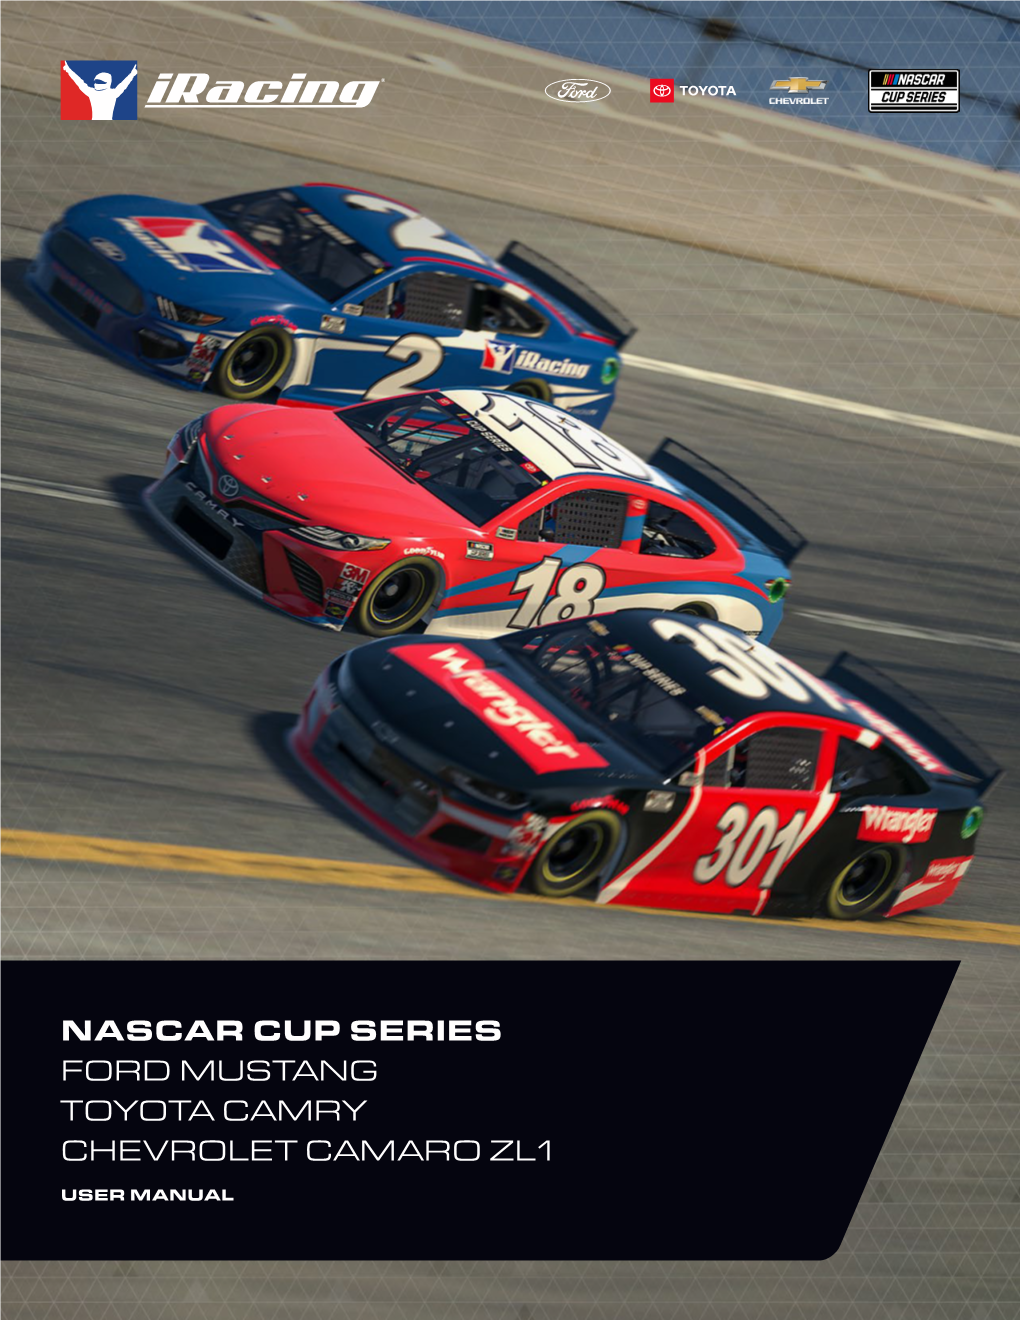 NASCAR Cup Series Cars User Manual